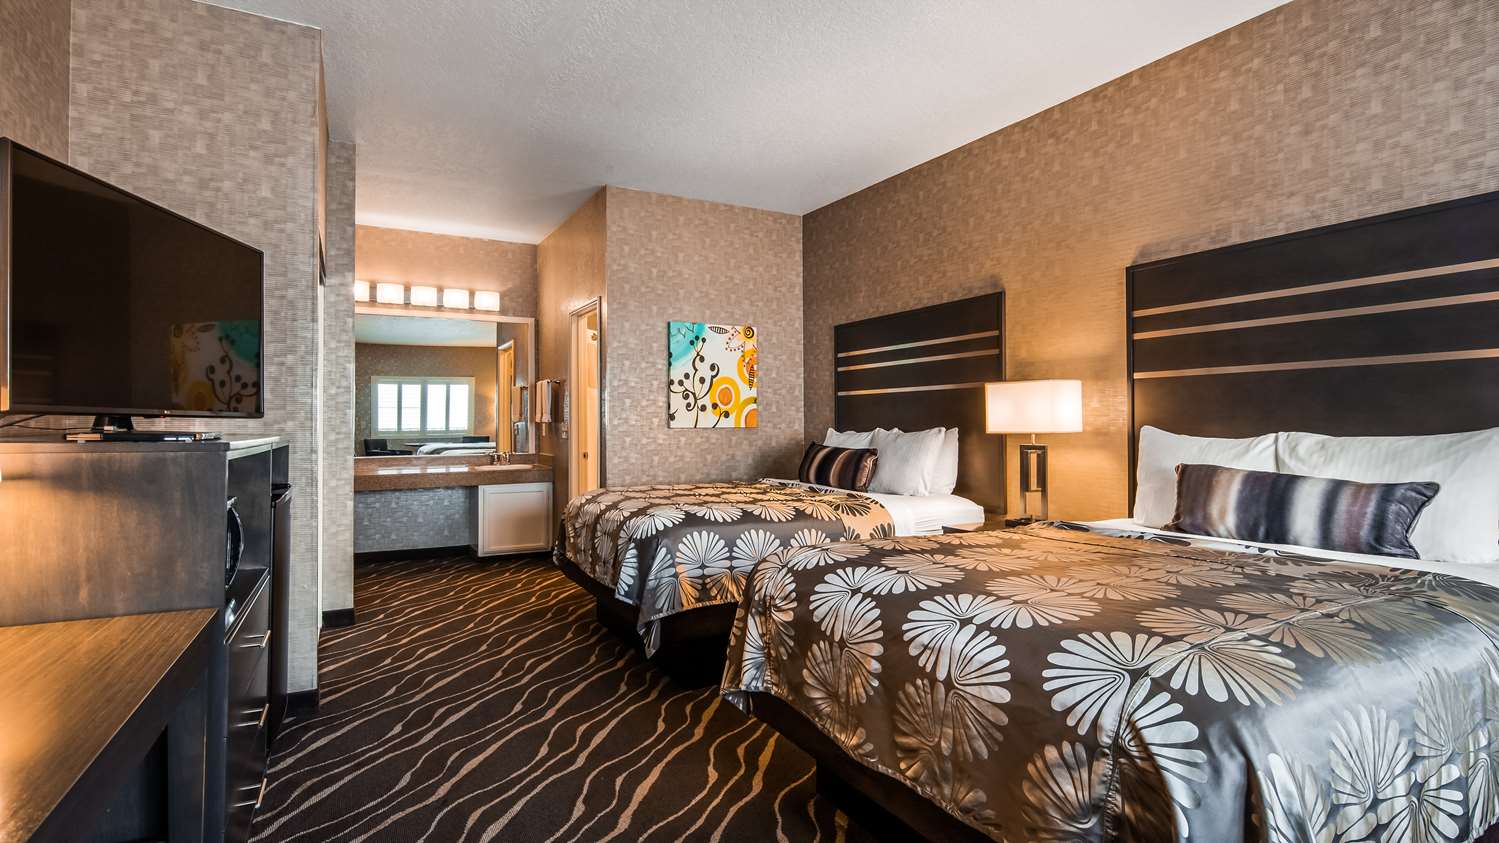 A standard room in the Best Western Hotel near Disneyland